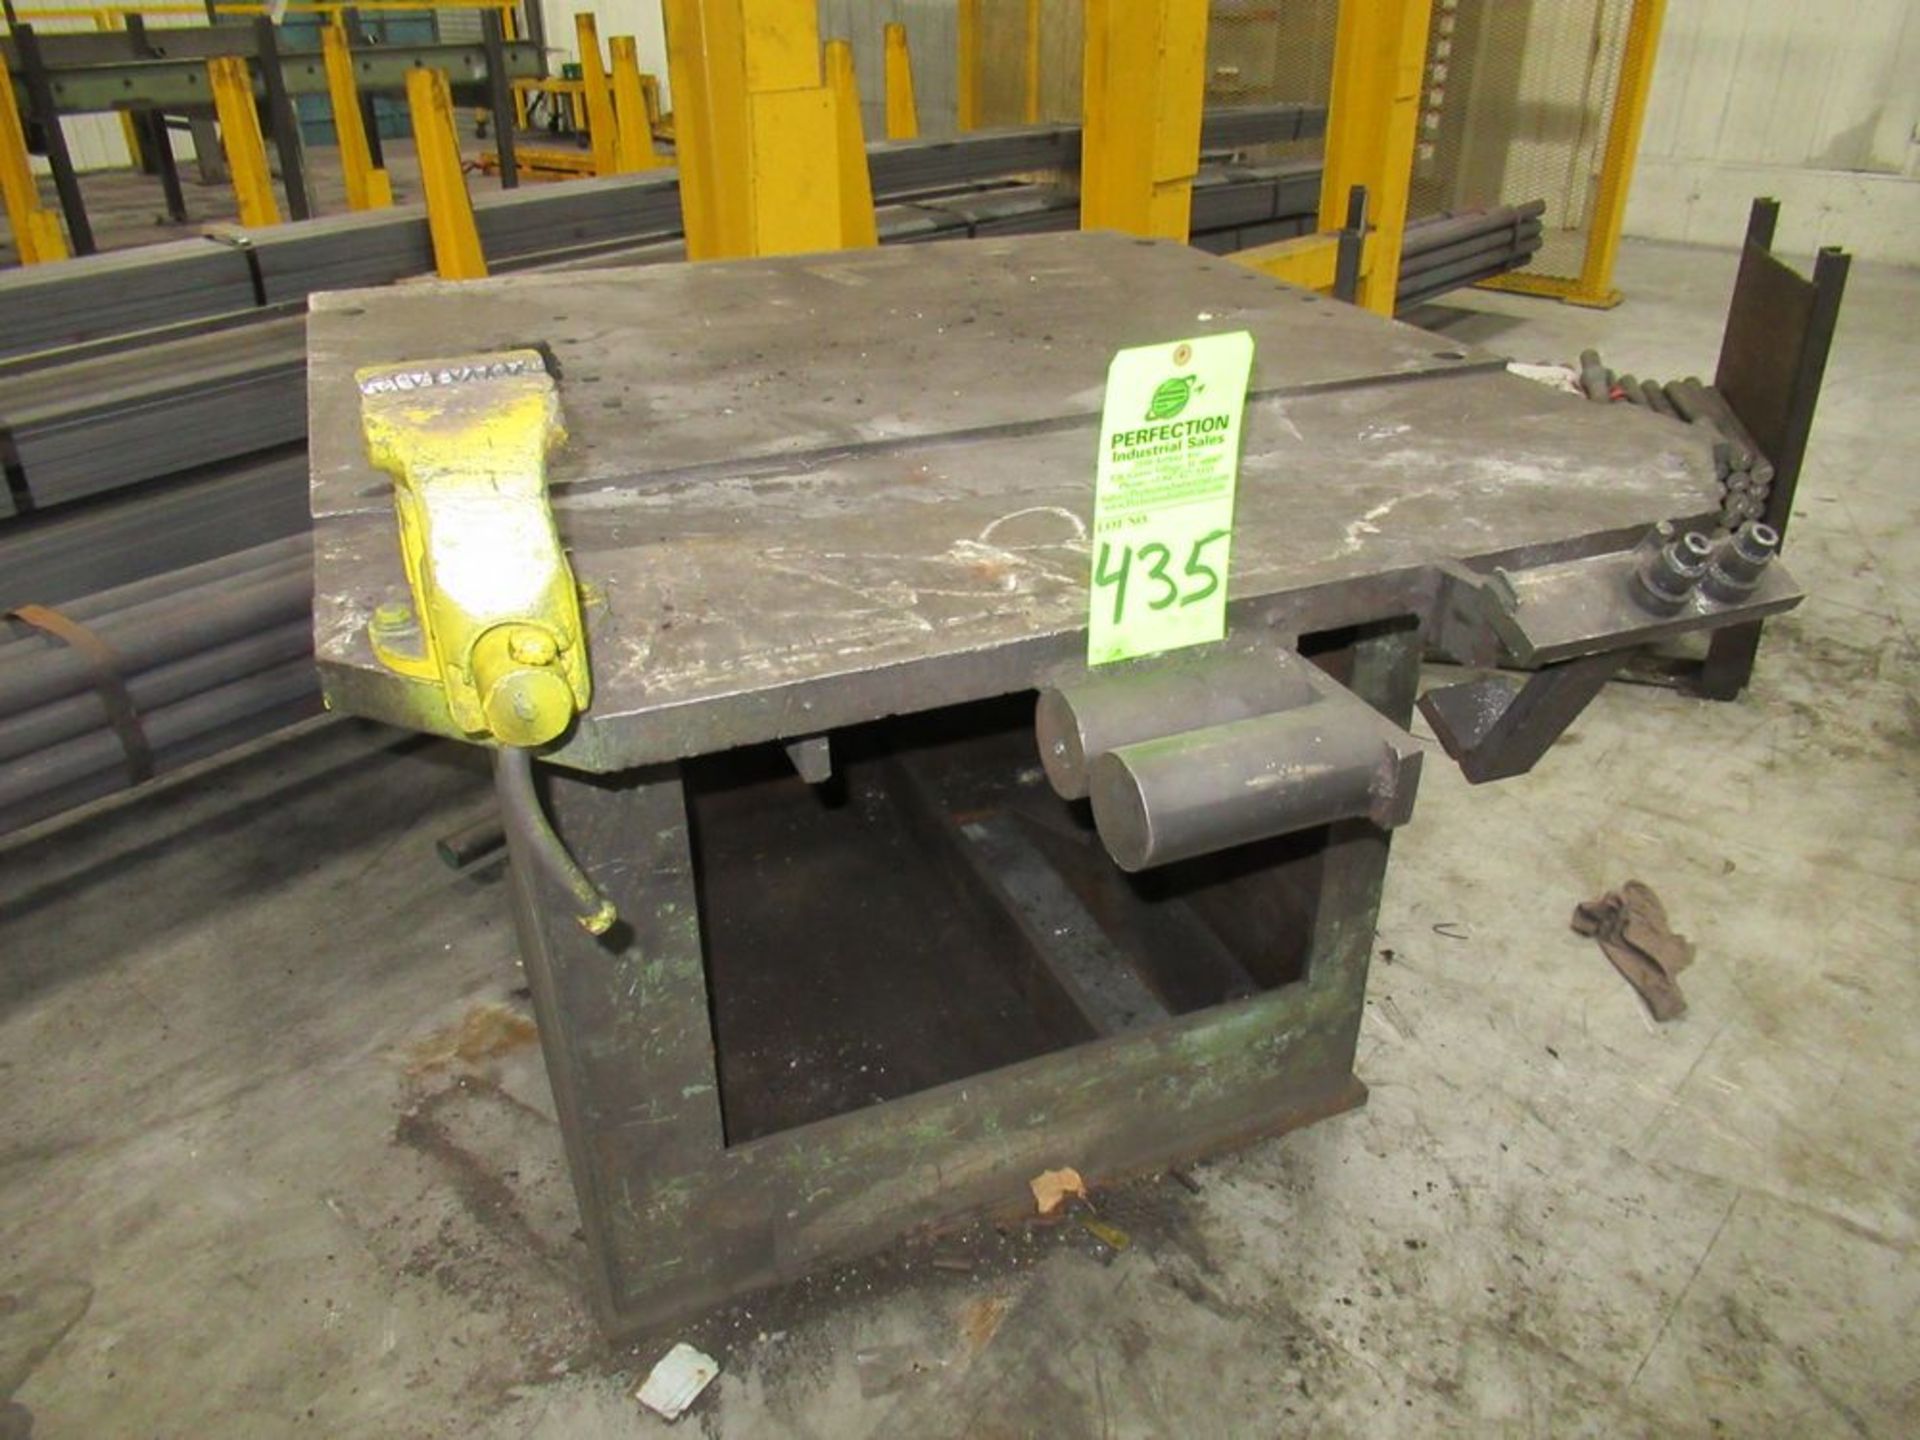 Heavy Steel Work Table w/ Vise 48 x 48", 1" Steel Top ($75 Rigging Cost)